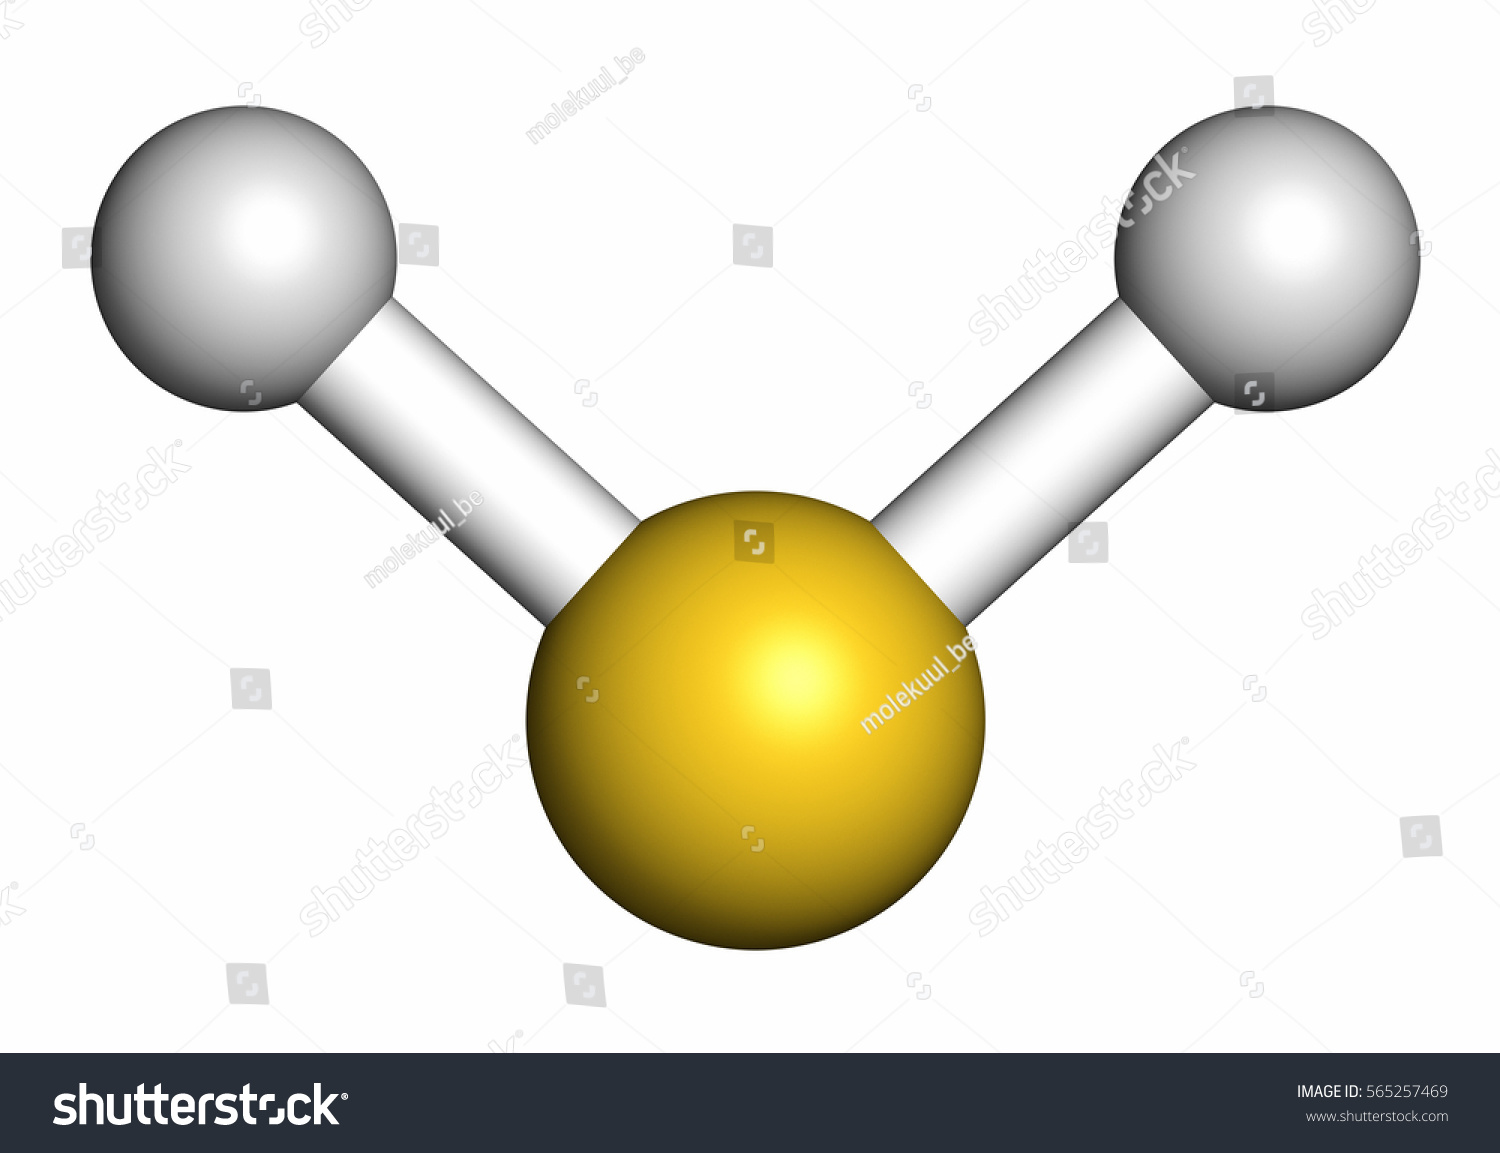 hydrogen sulfide lewis structure